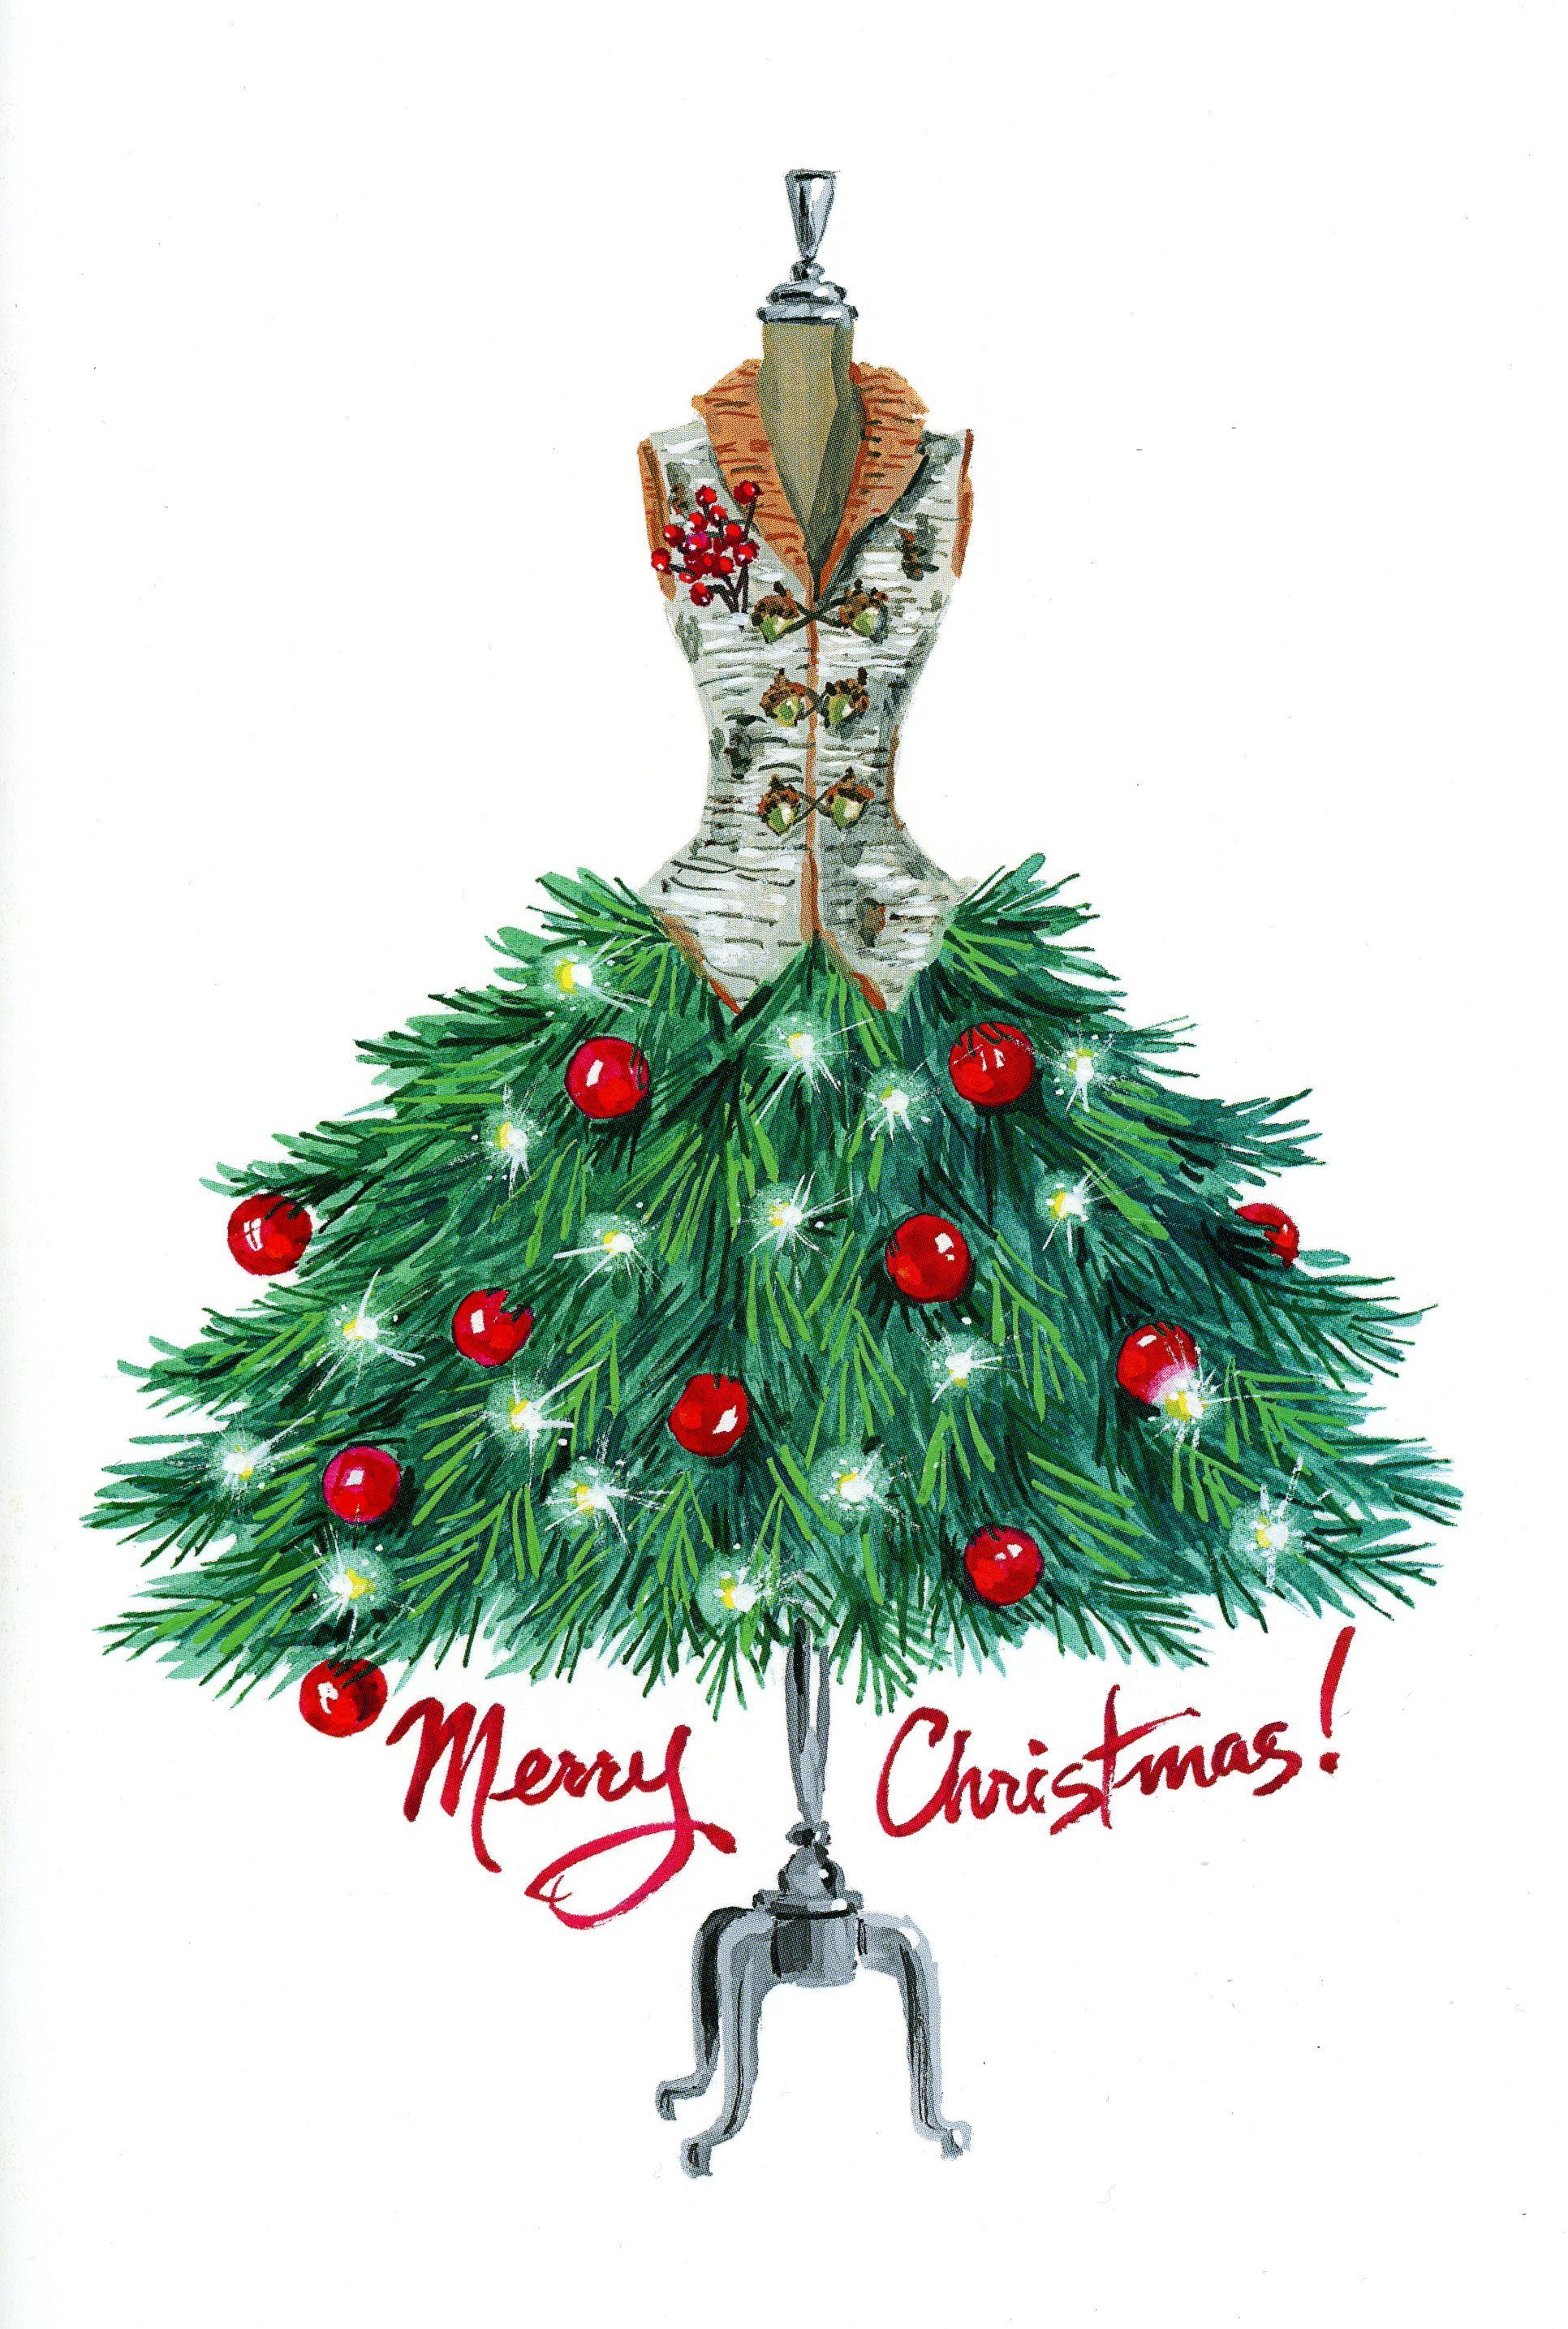 J. Peterman Holiday catalog 2014 Merry Christmas dress form illustration. Christmas illustration, Christmas drawing, Holiday wallpaper